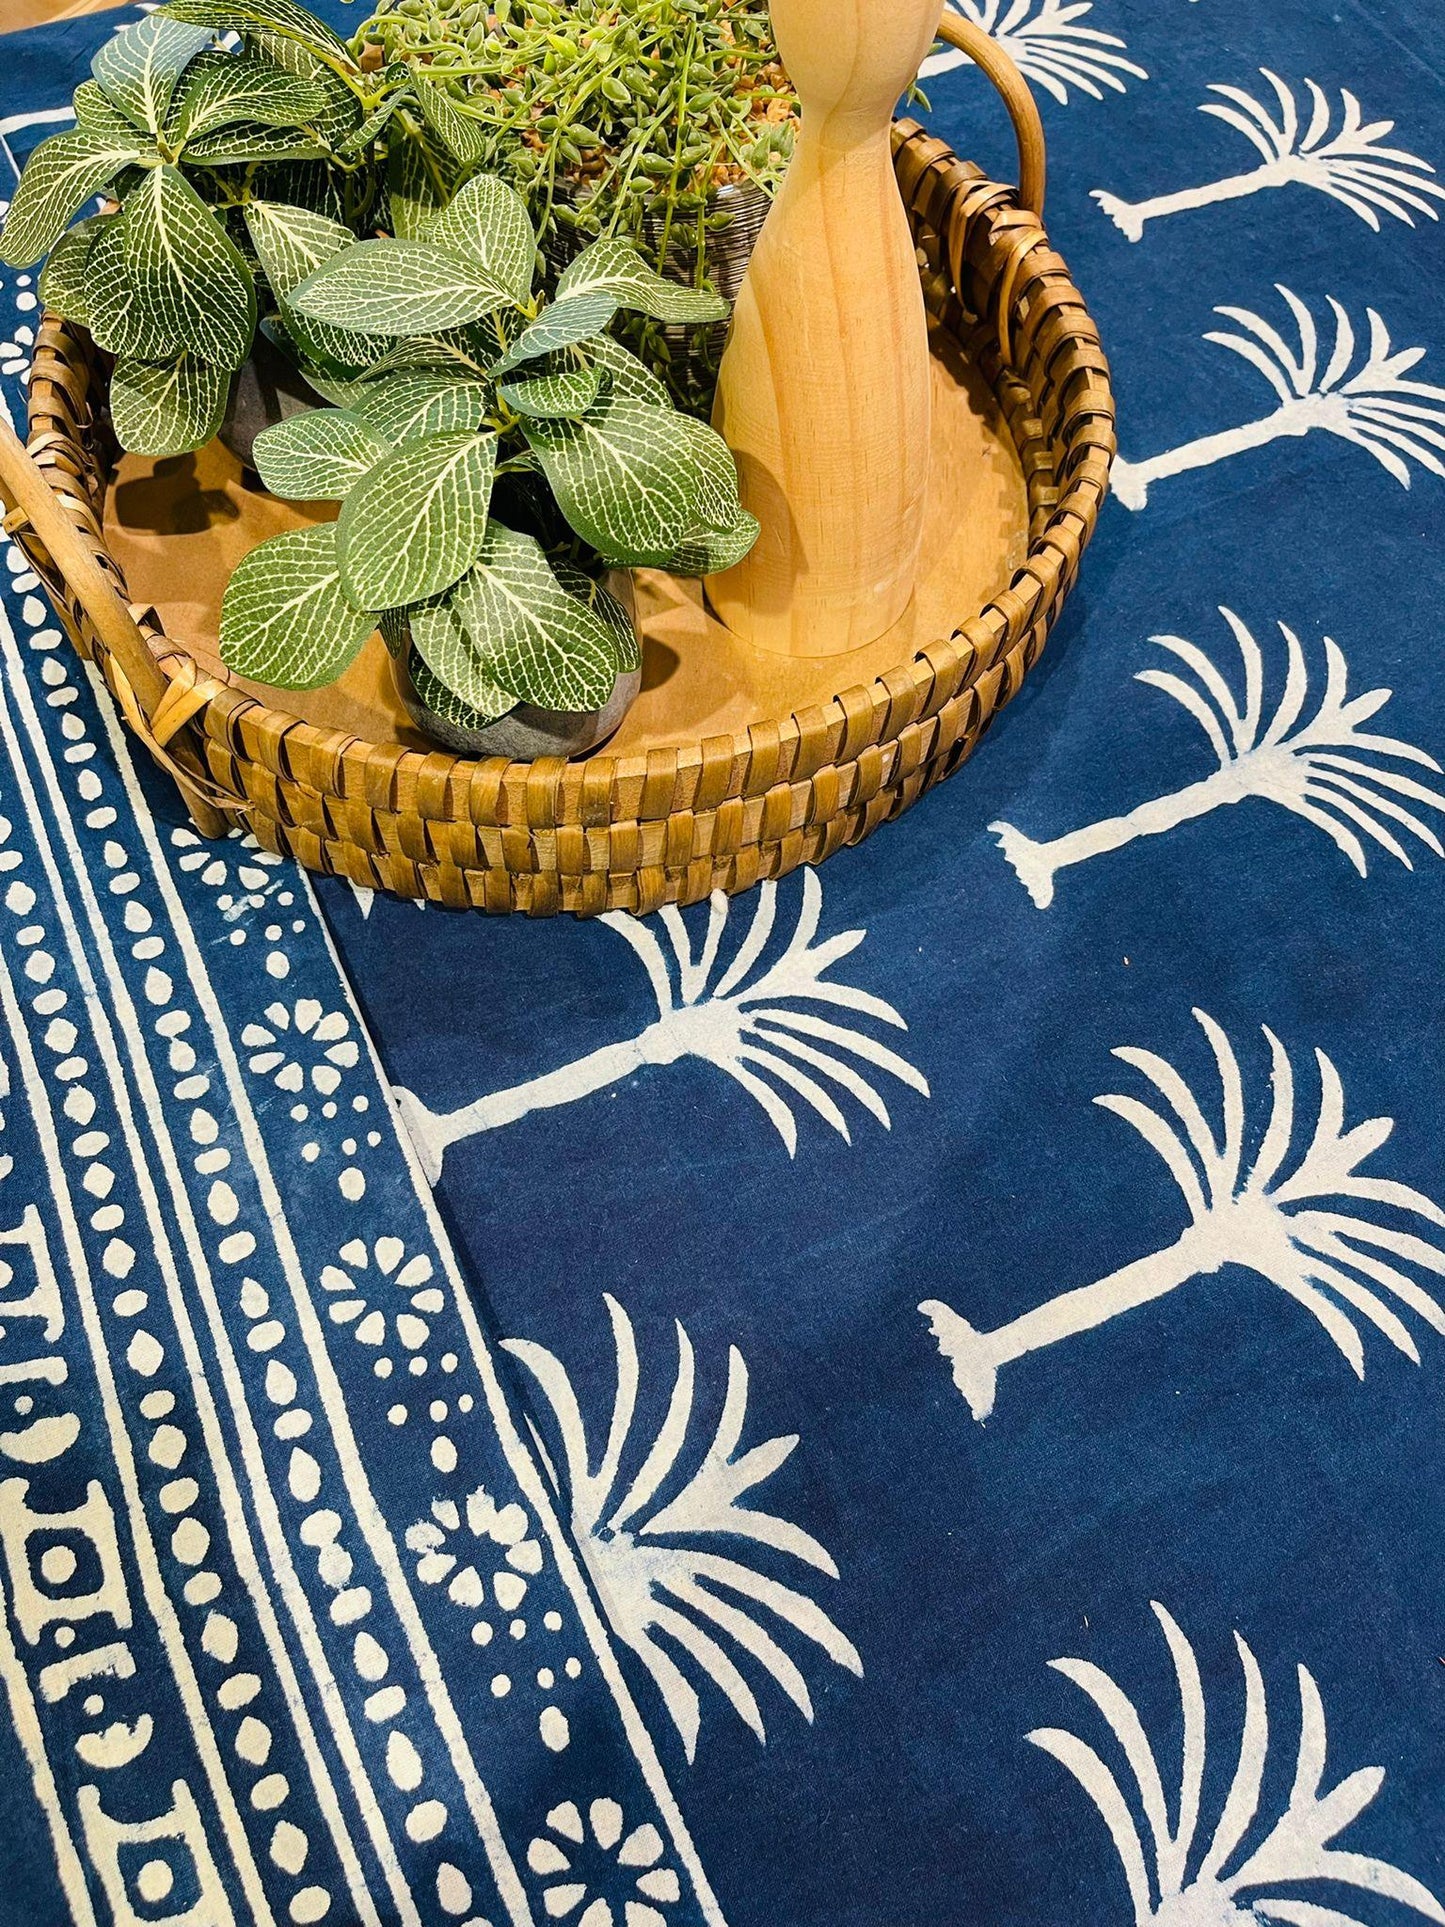 Cotton Table cloth - Indigo Palm tree hand block print - Rooii by Tuvisha